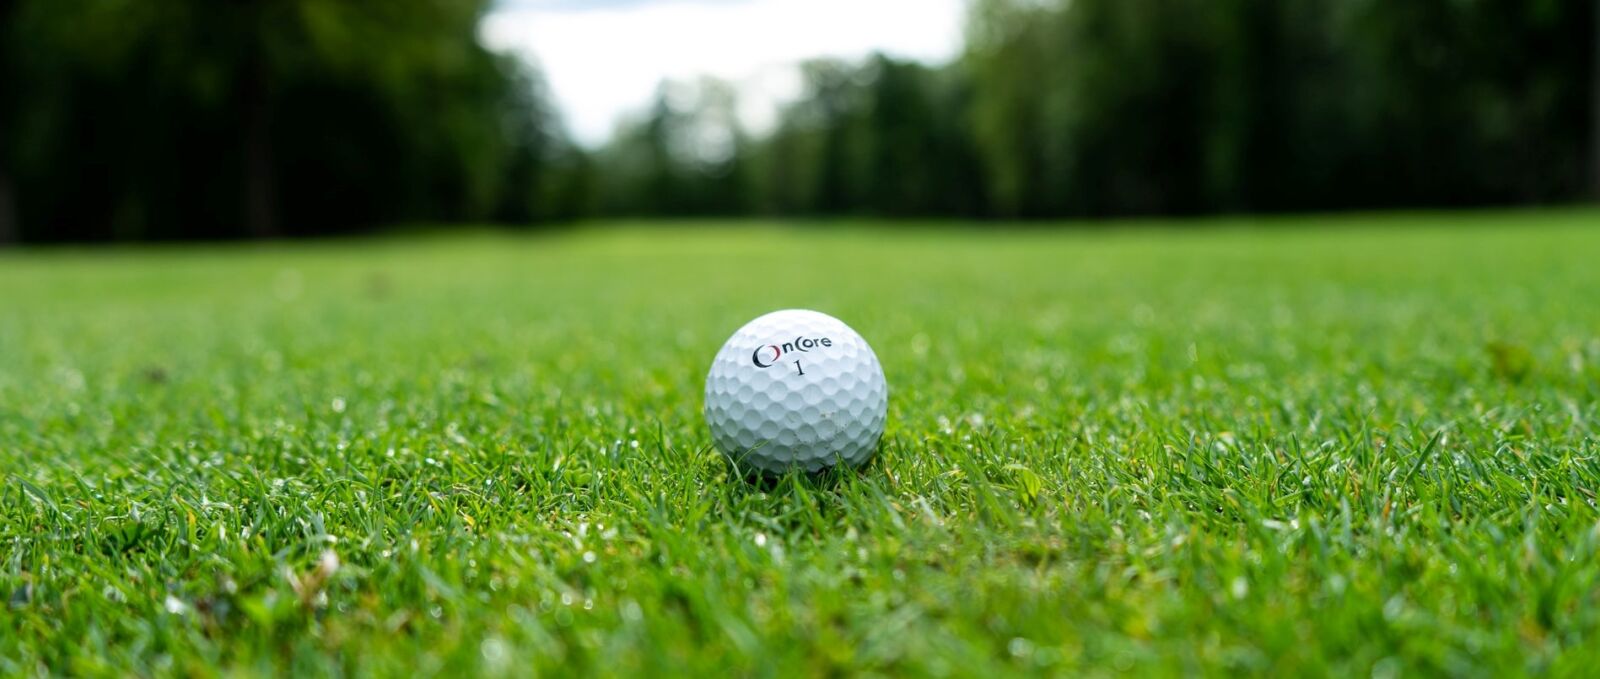 golf ball on a golf course in florida